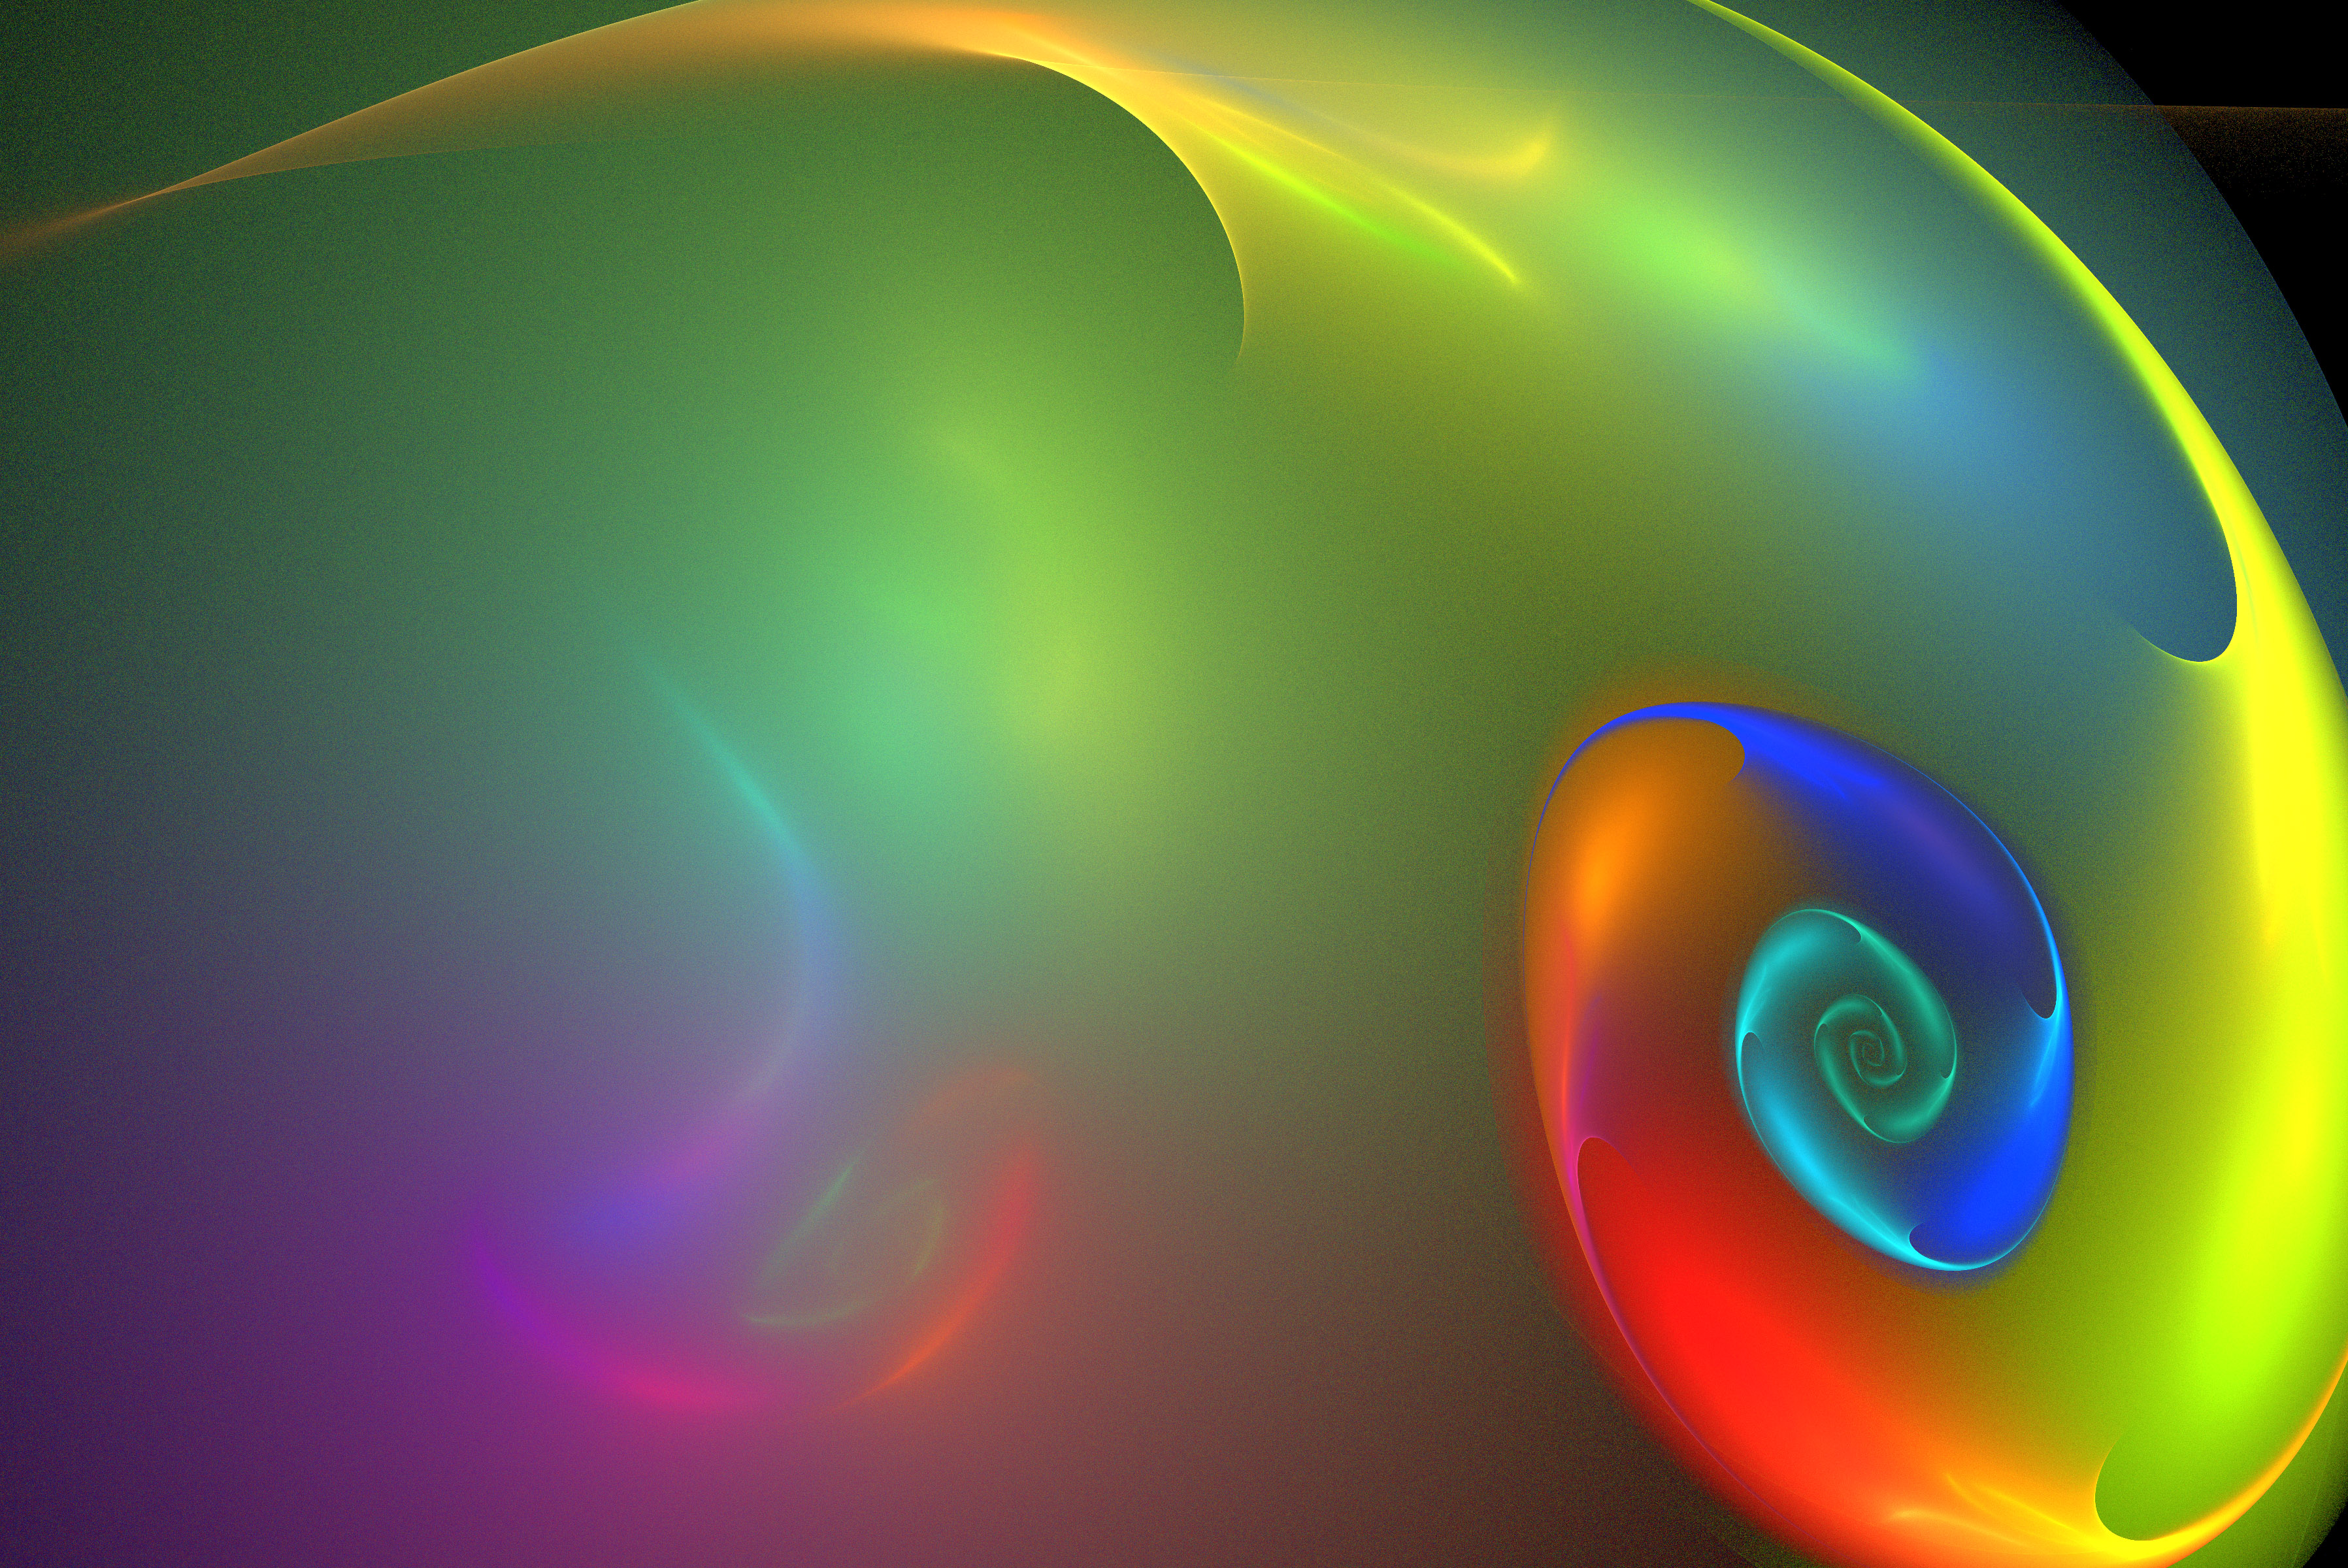 Free image of rainbow spiral